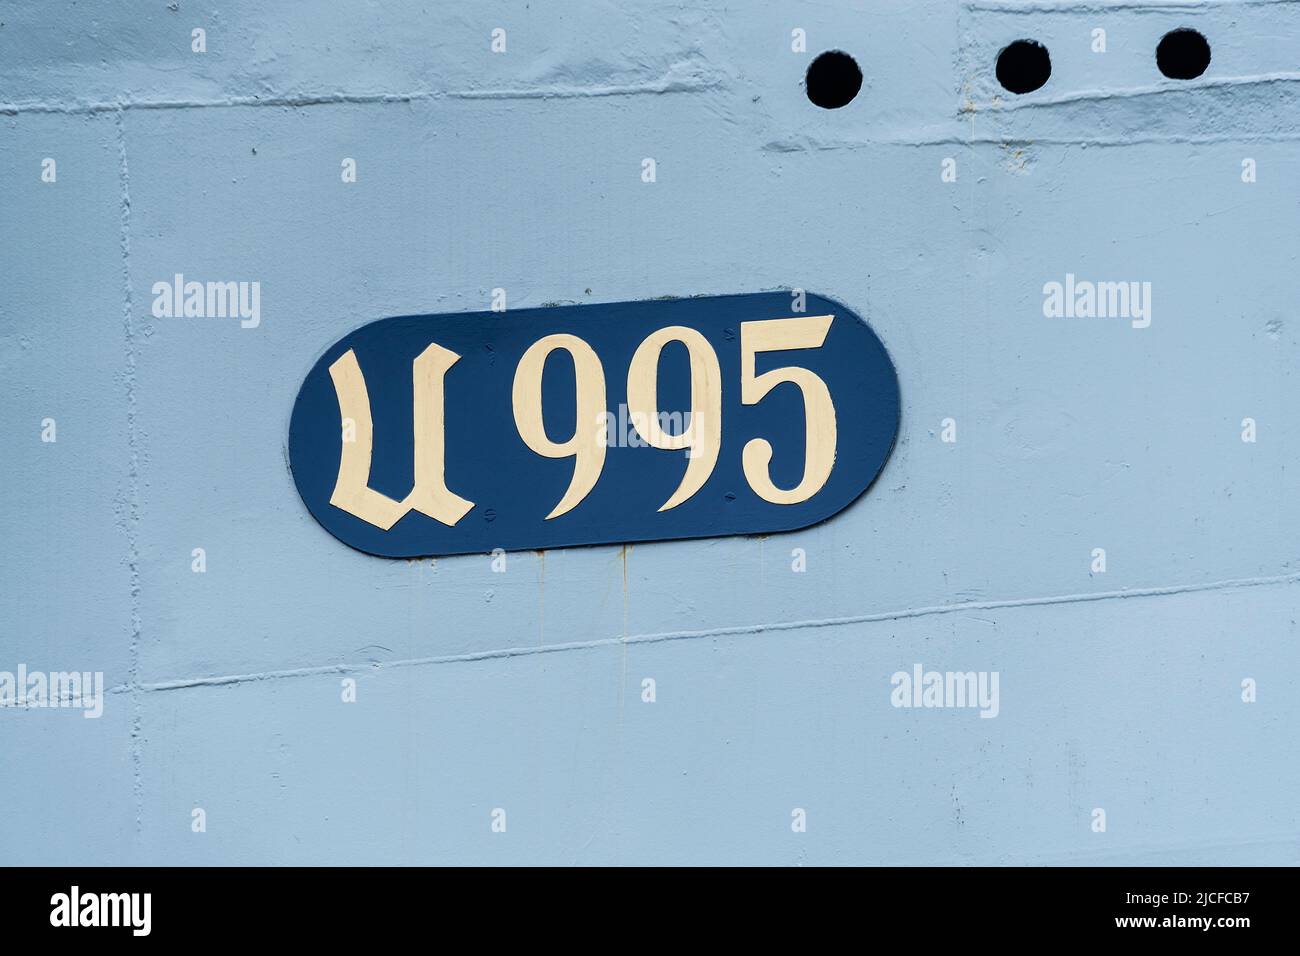 Schleswig-Holstein, Kiel Fjord, Laboe, Naval Museum, historical submarine U 995, lettering 'U995 Stock Photo